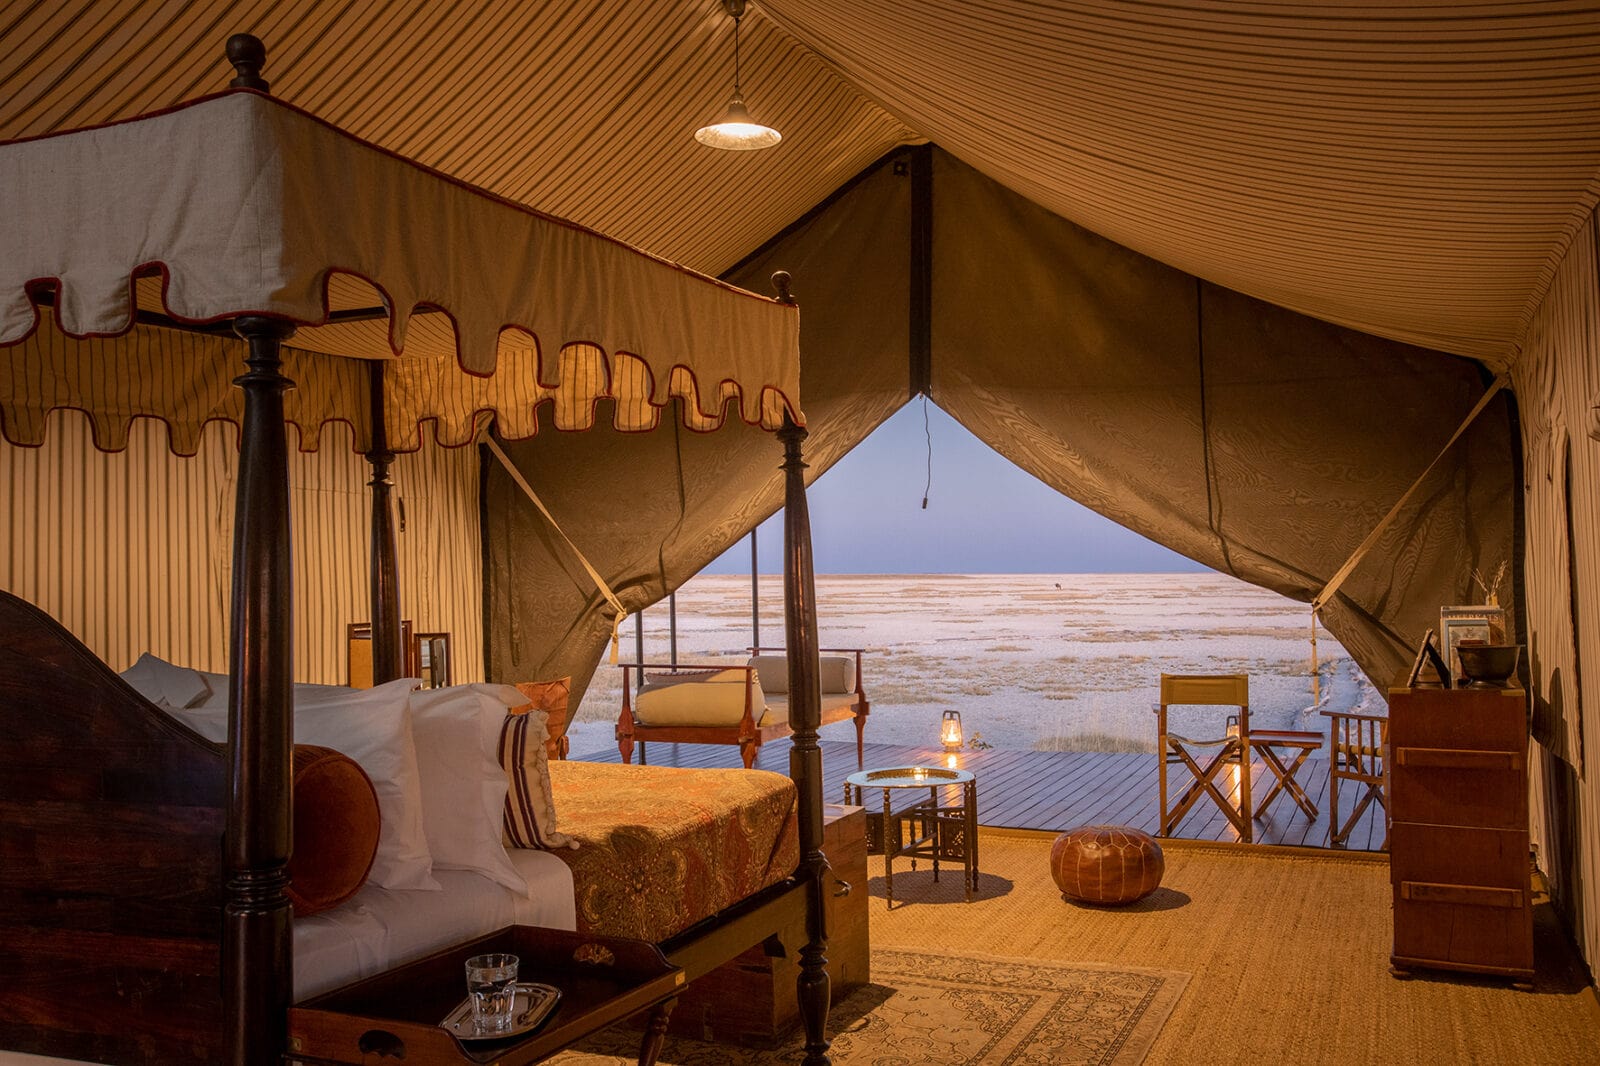 luxurious tents interior overlooking salt pans